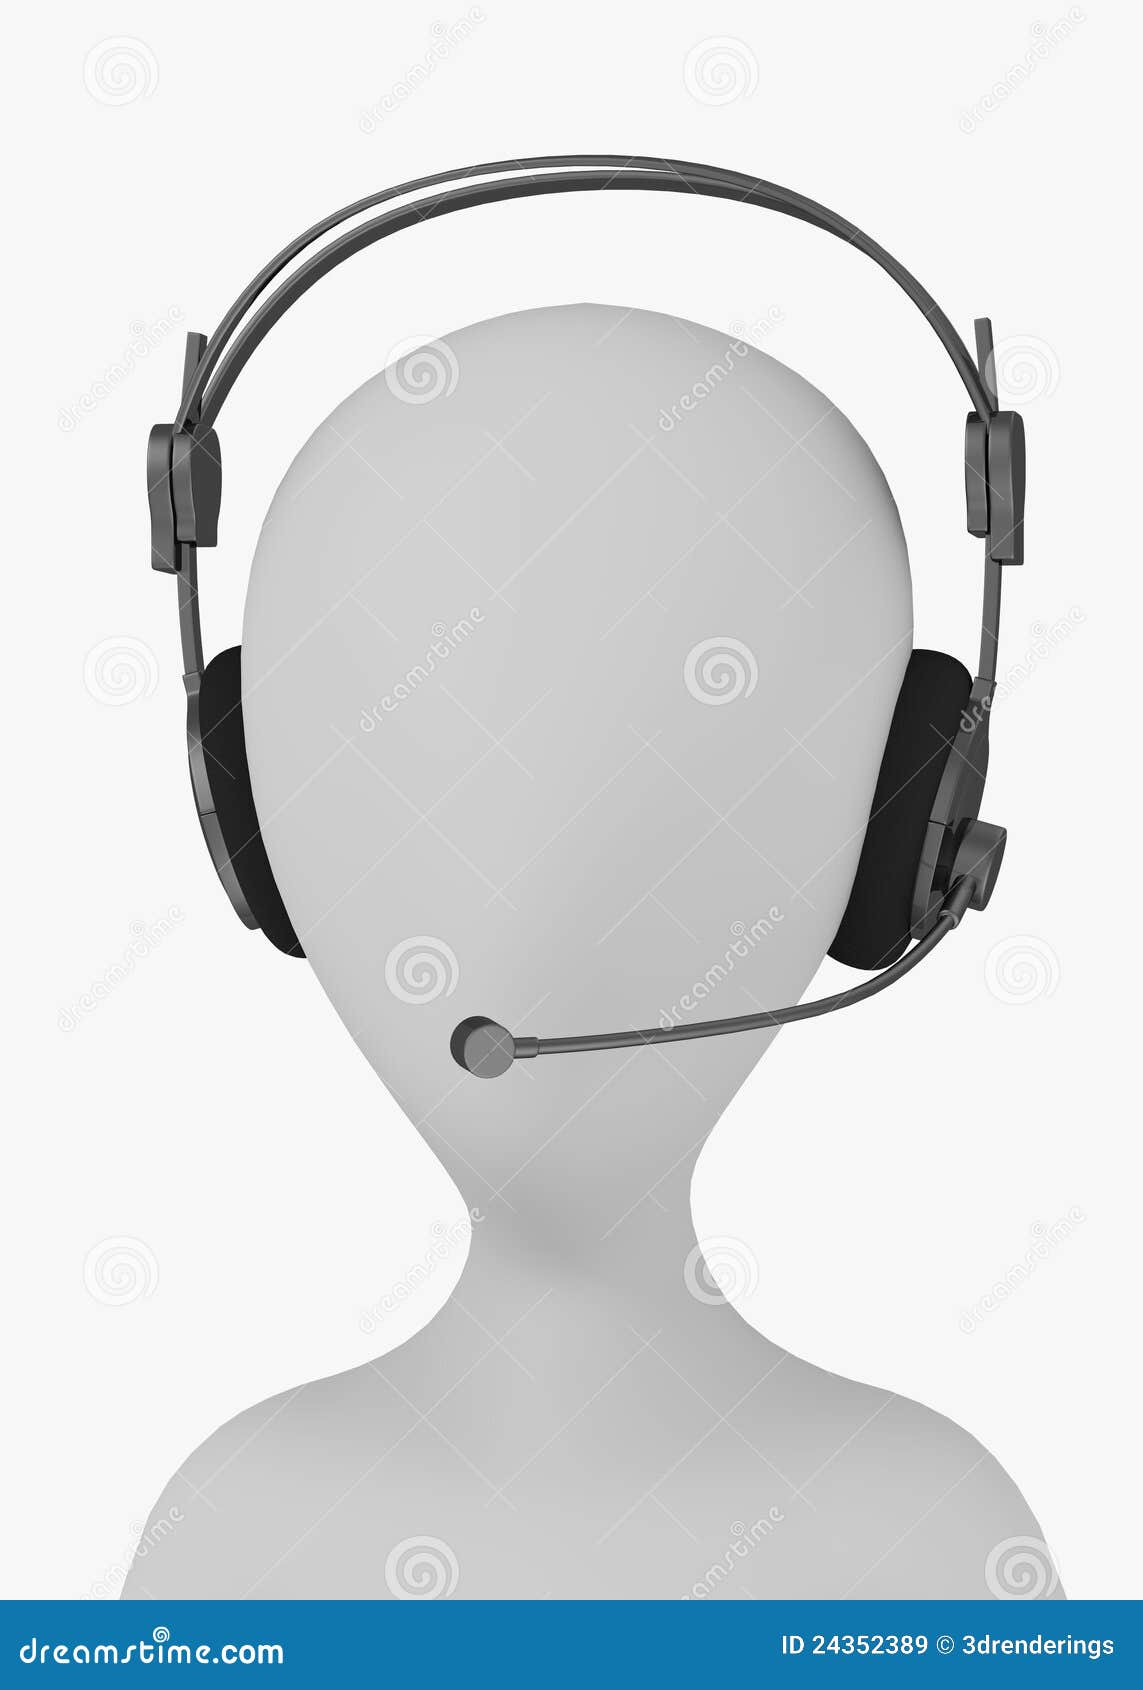 Cartoon Character with Headphones on Head 14 Stock Illustration -  Illustration of information, technology: 24352389